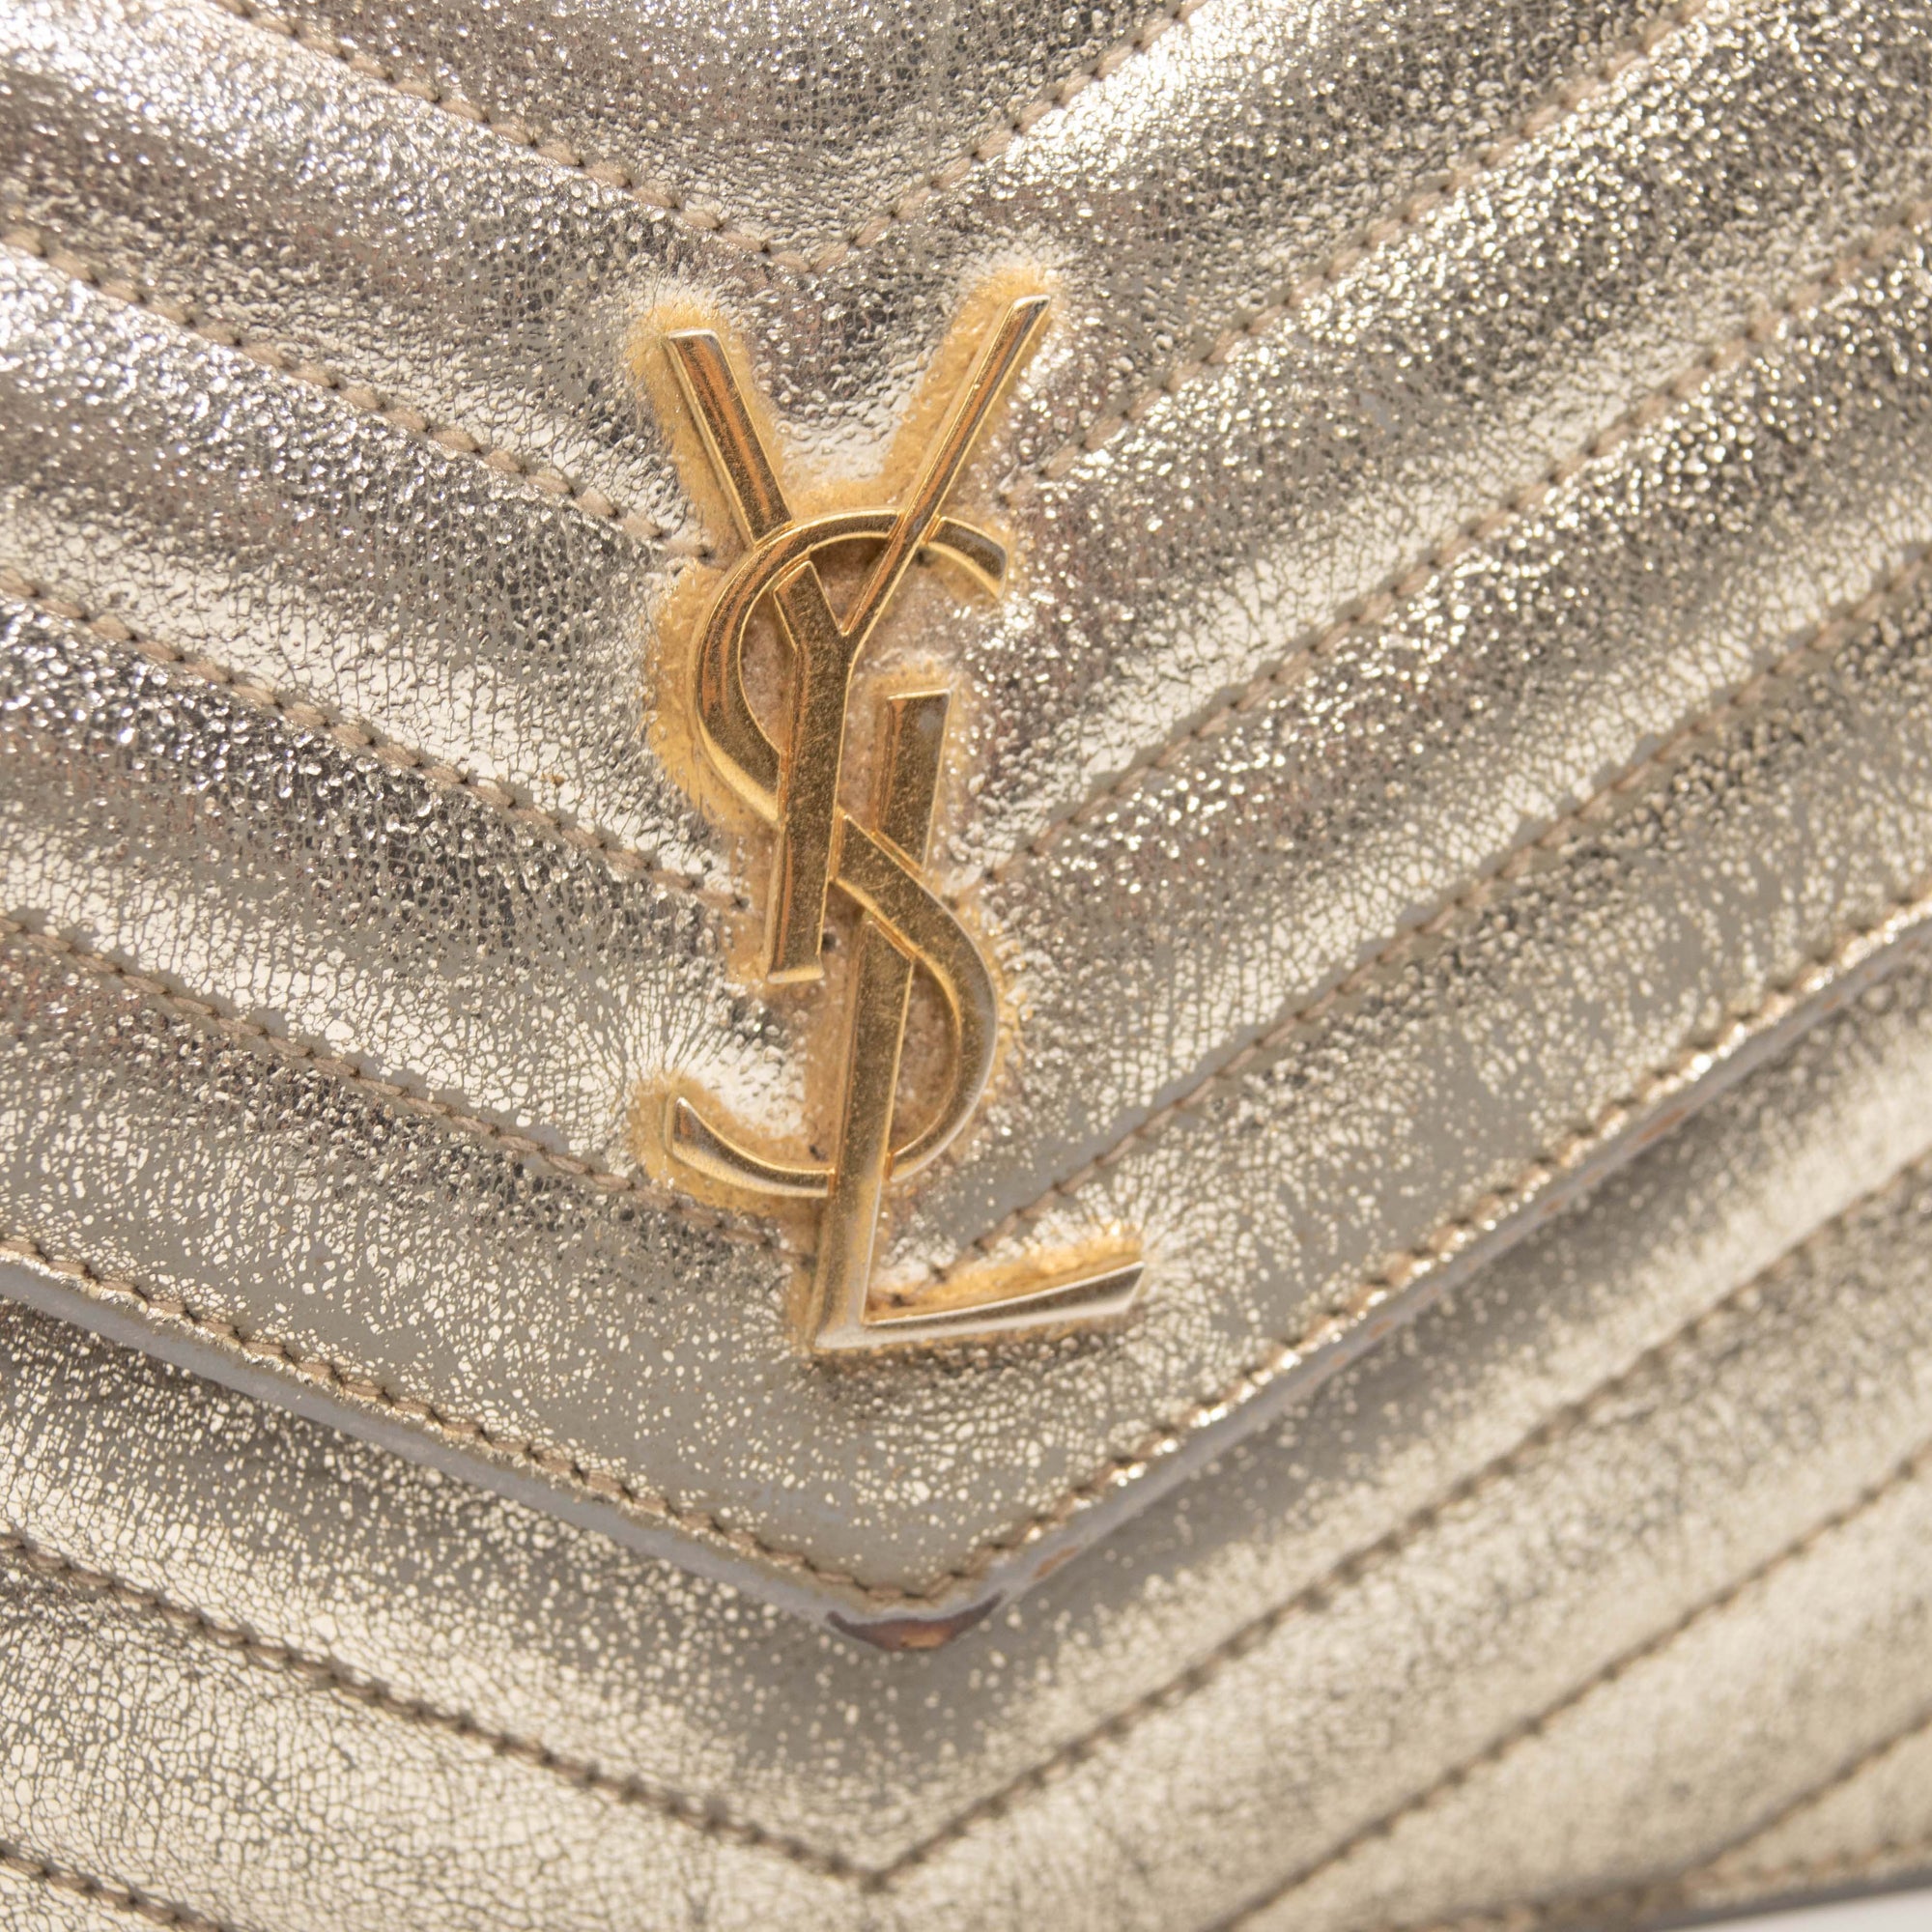 Saint Laurent Card Holder Case - Metallic Gold Leather Wallet YSL